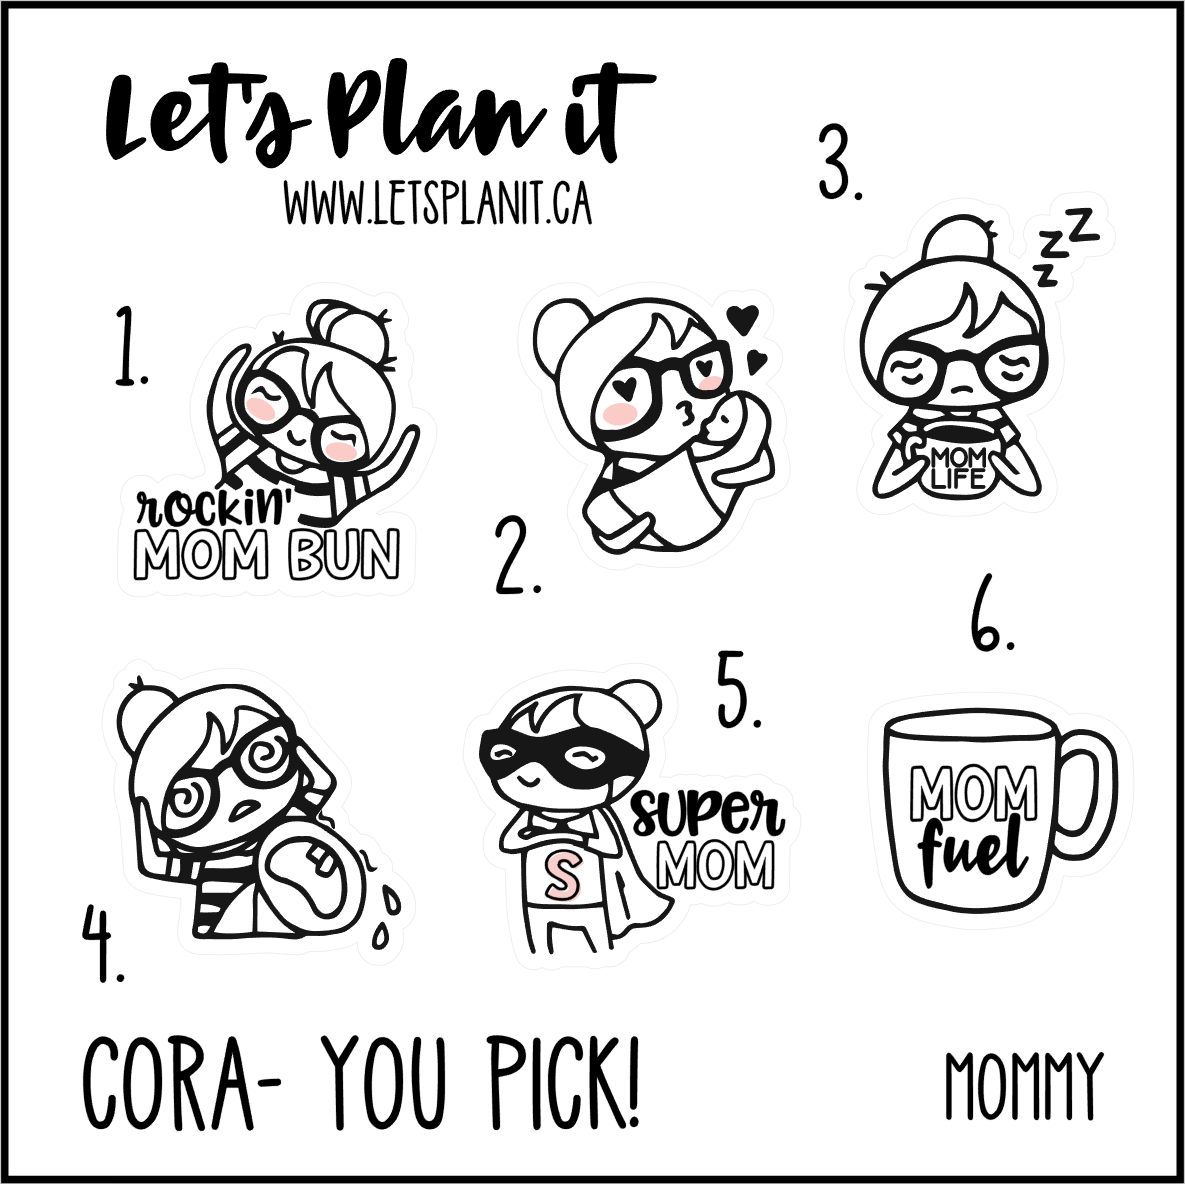 Cora-u-pick- Mommy